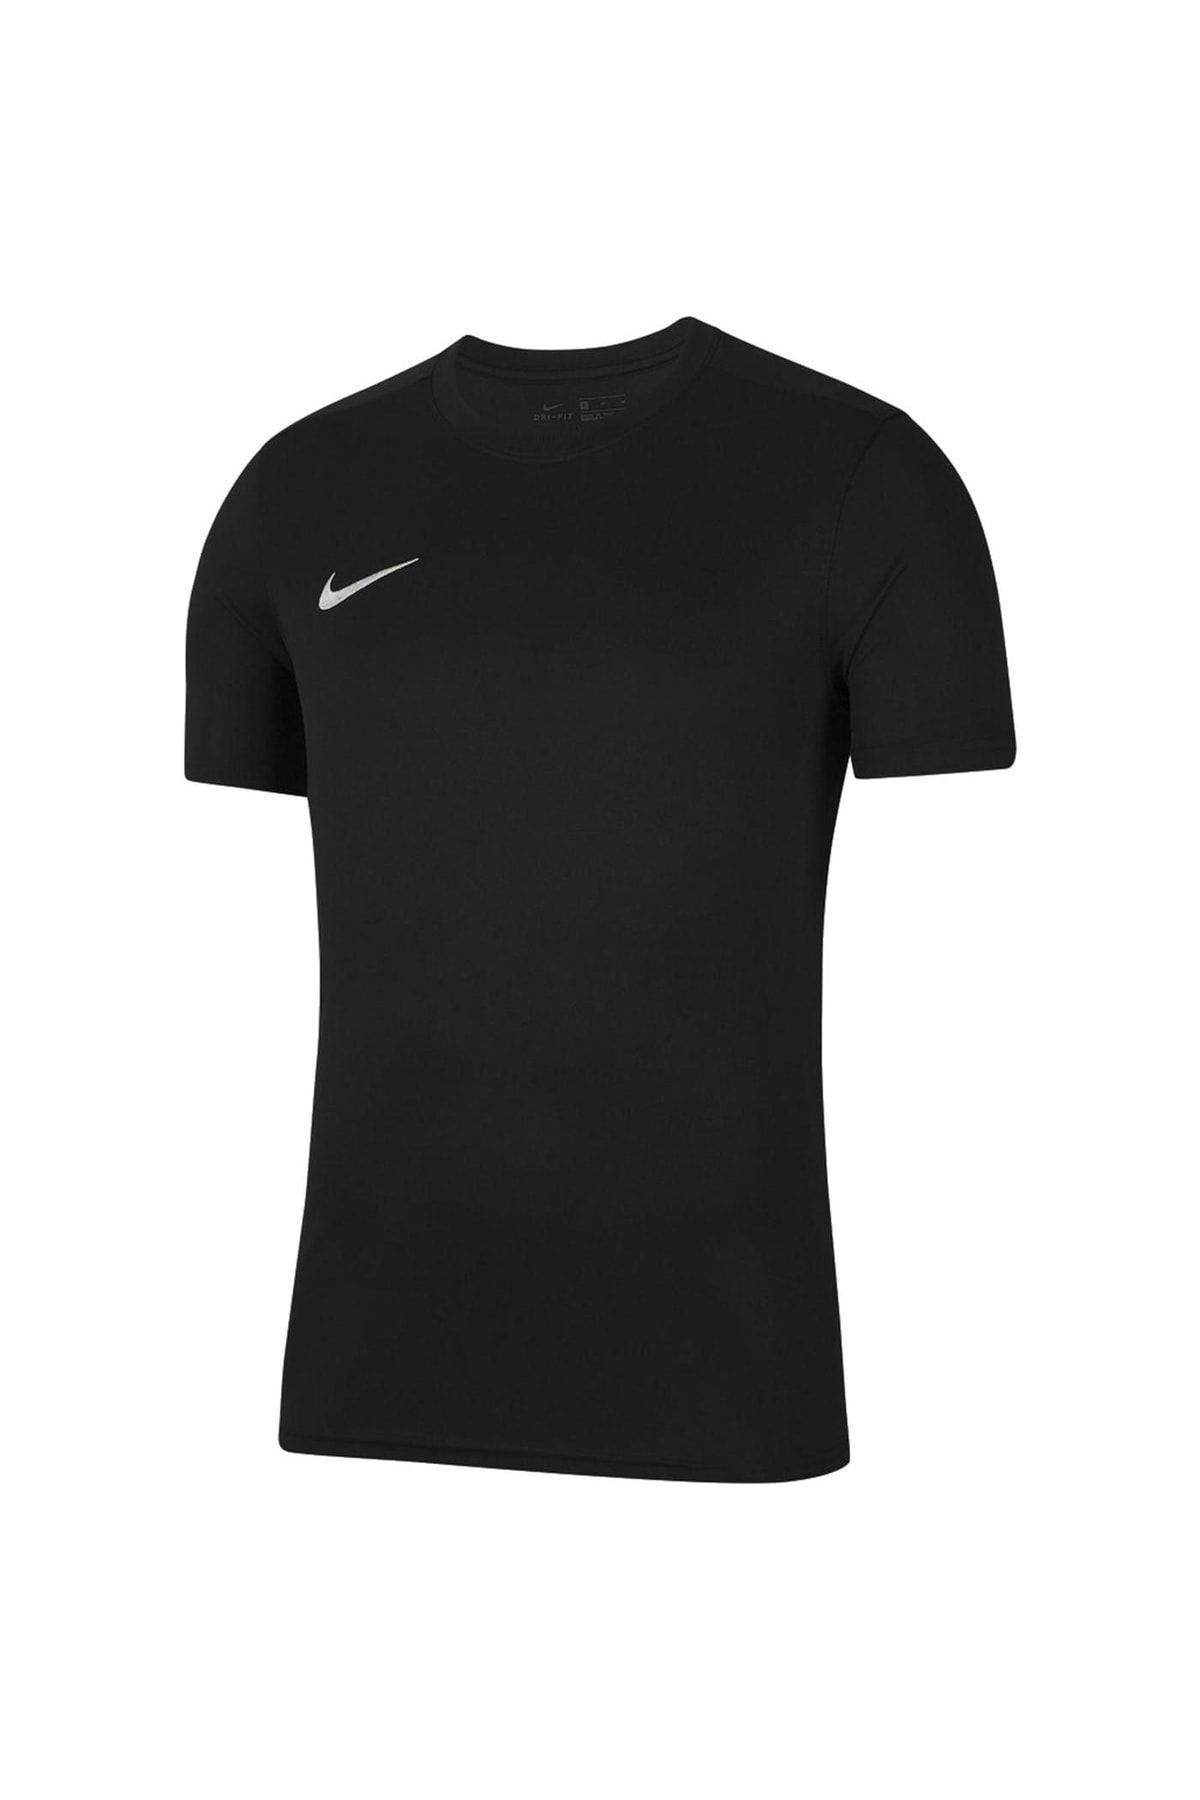 Nike Dry Park Vıı Jsy Erkek Tişört & Forma - Bv6708-010